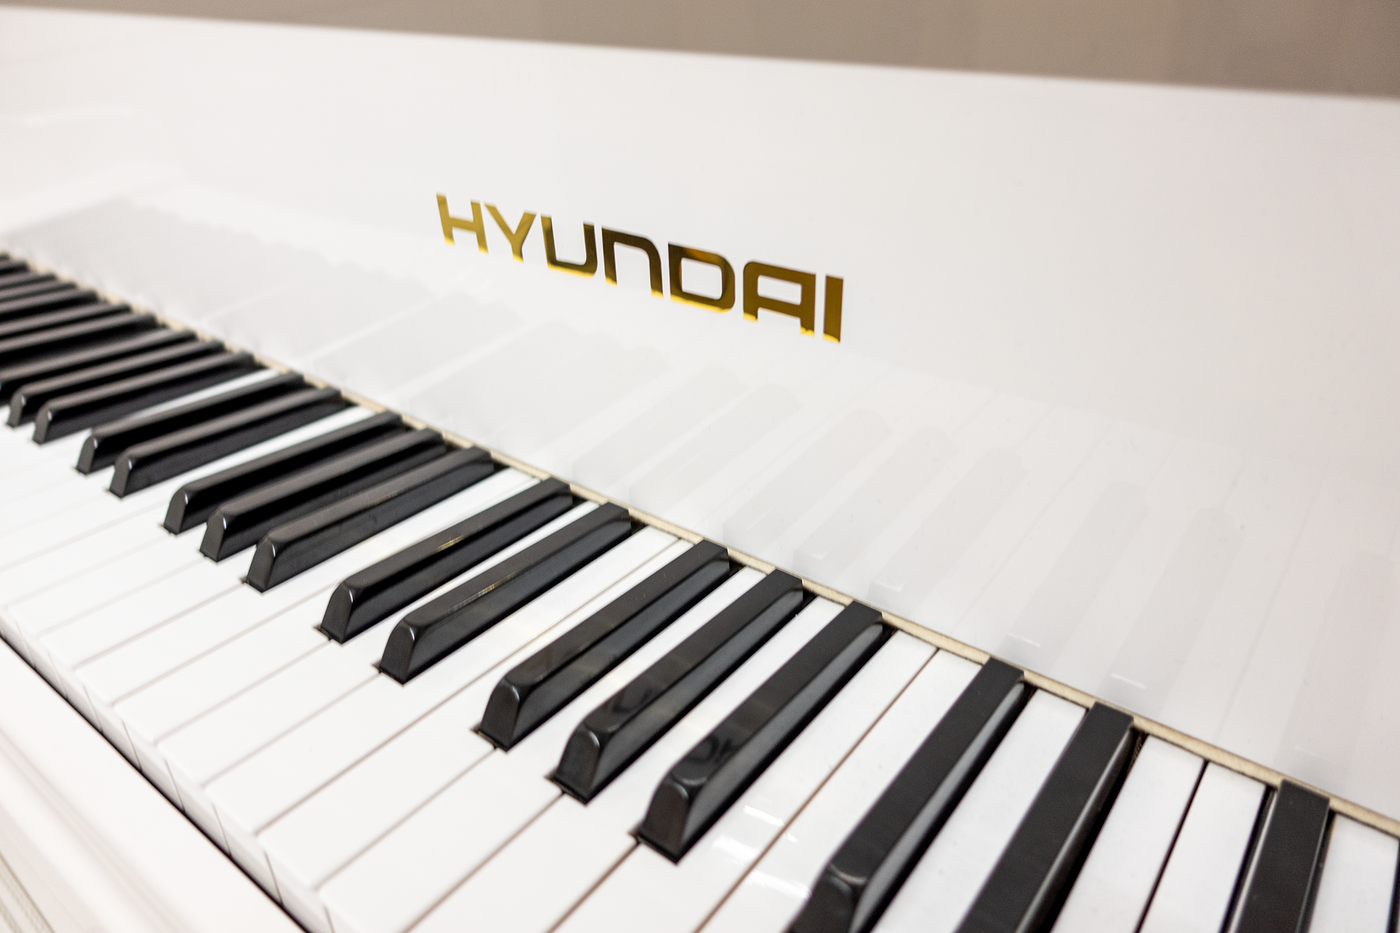 Hyundai G-50A Petite Baby Grand Piano